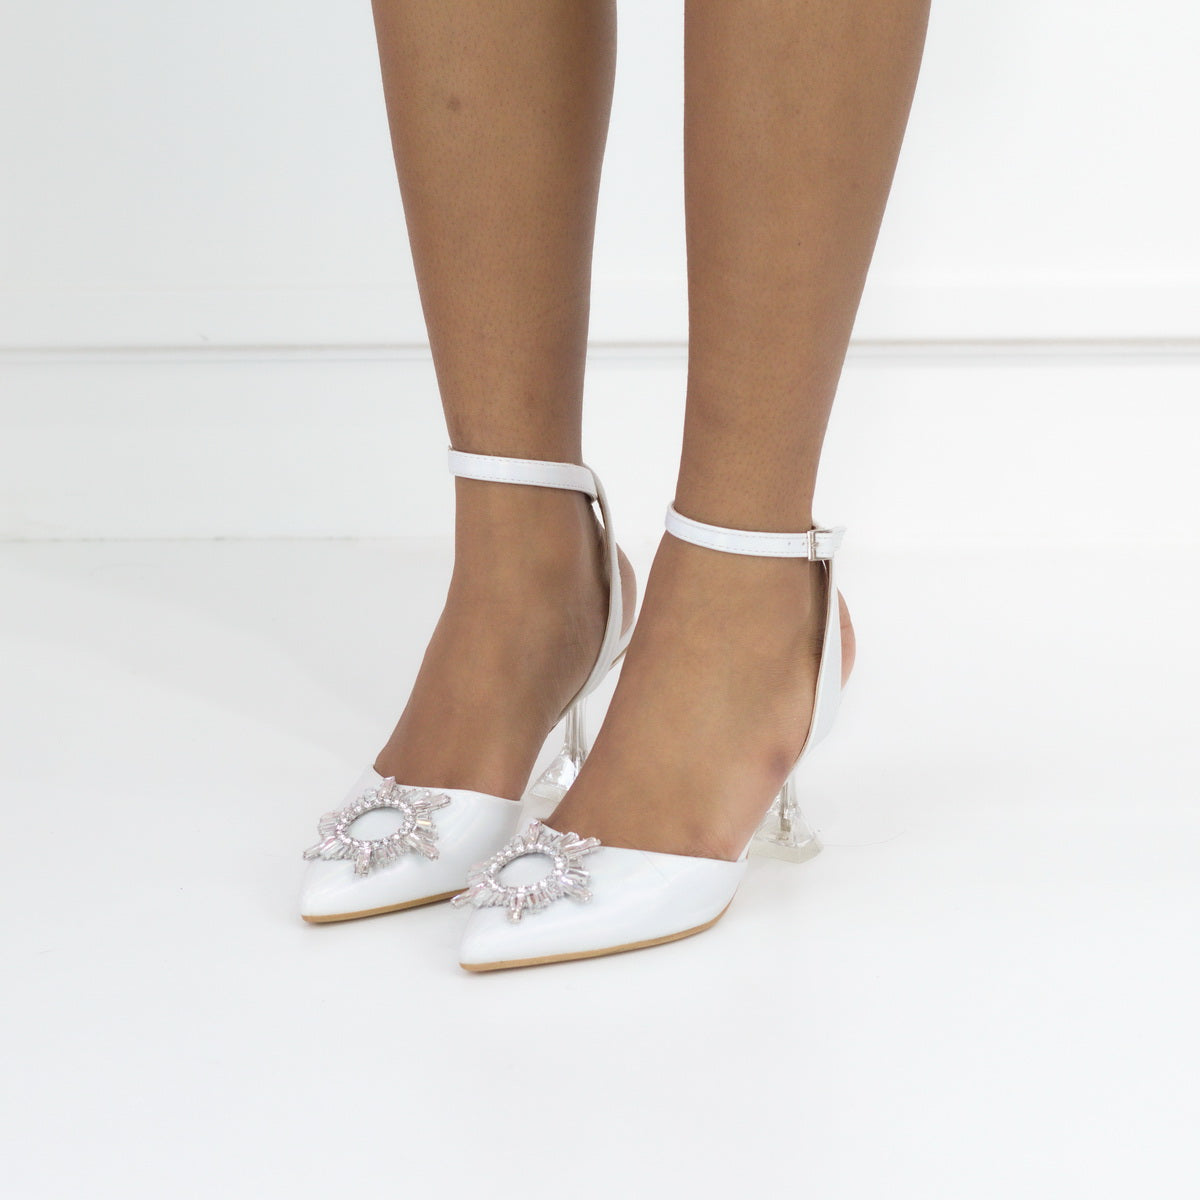 Muadi mid heel 7cm SATIN PU with trim white